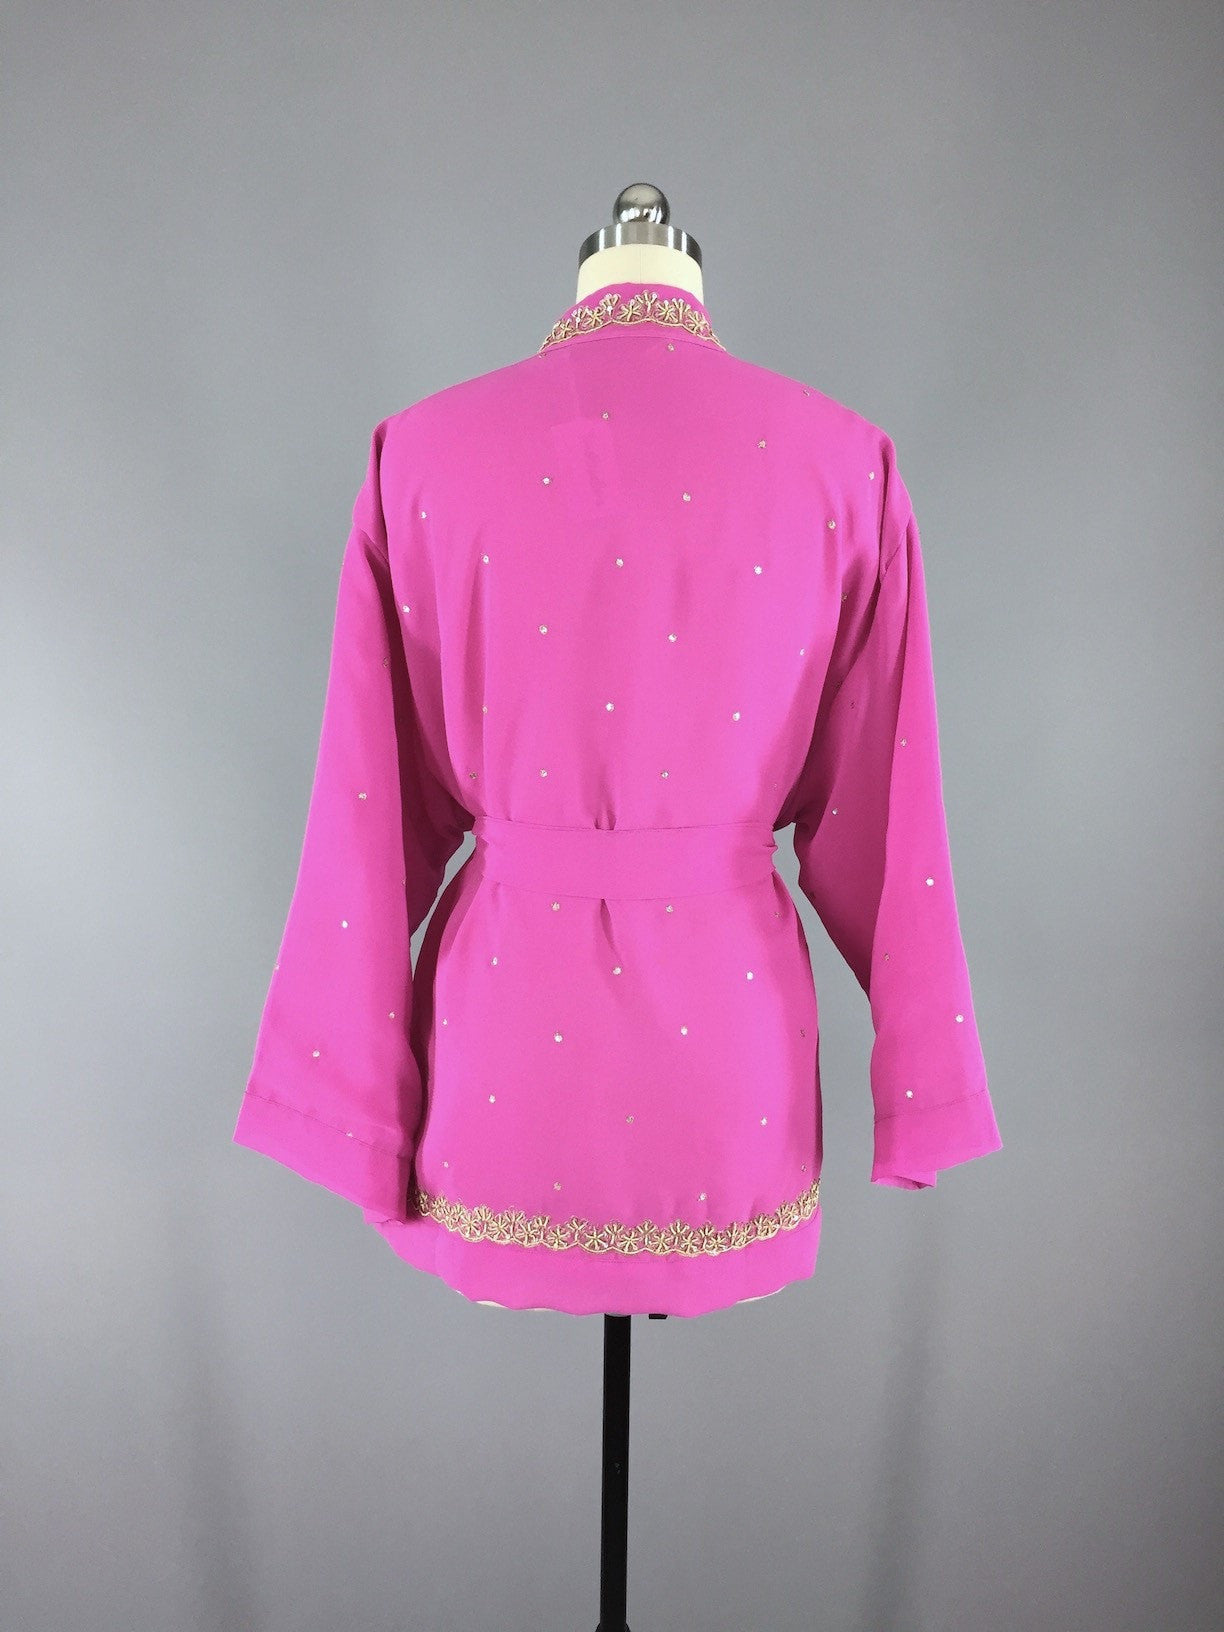 Silk Kimono Cardigan Jacket / Vintage Indian Sari / Pink Georgette - ThisBlueBird